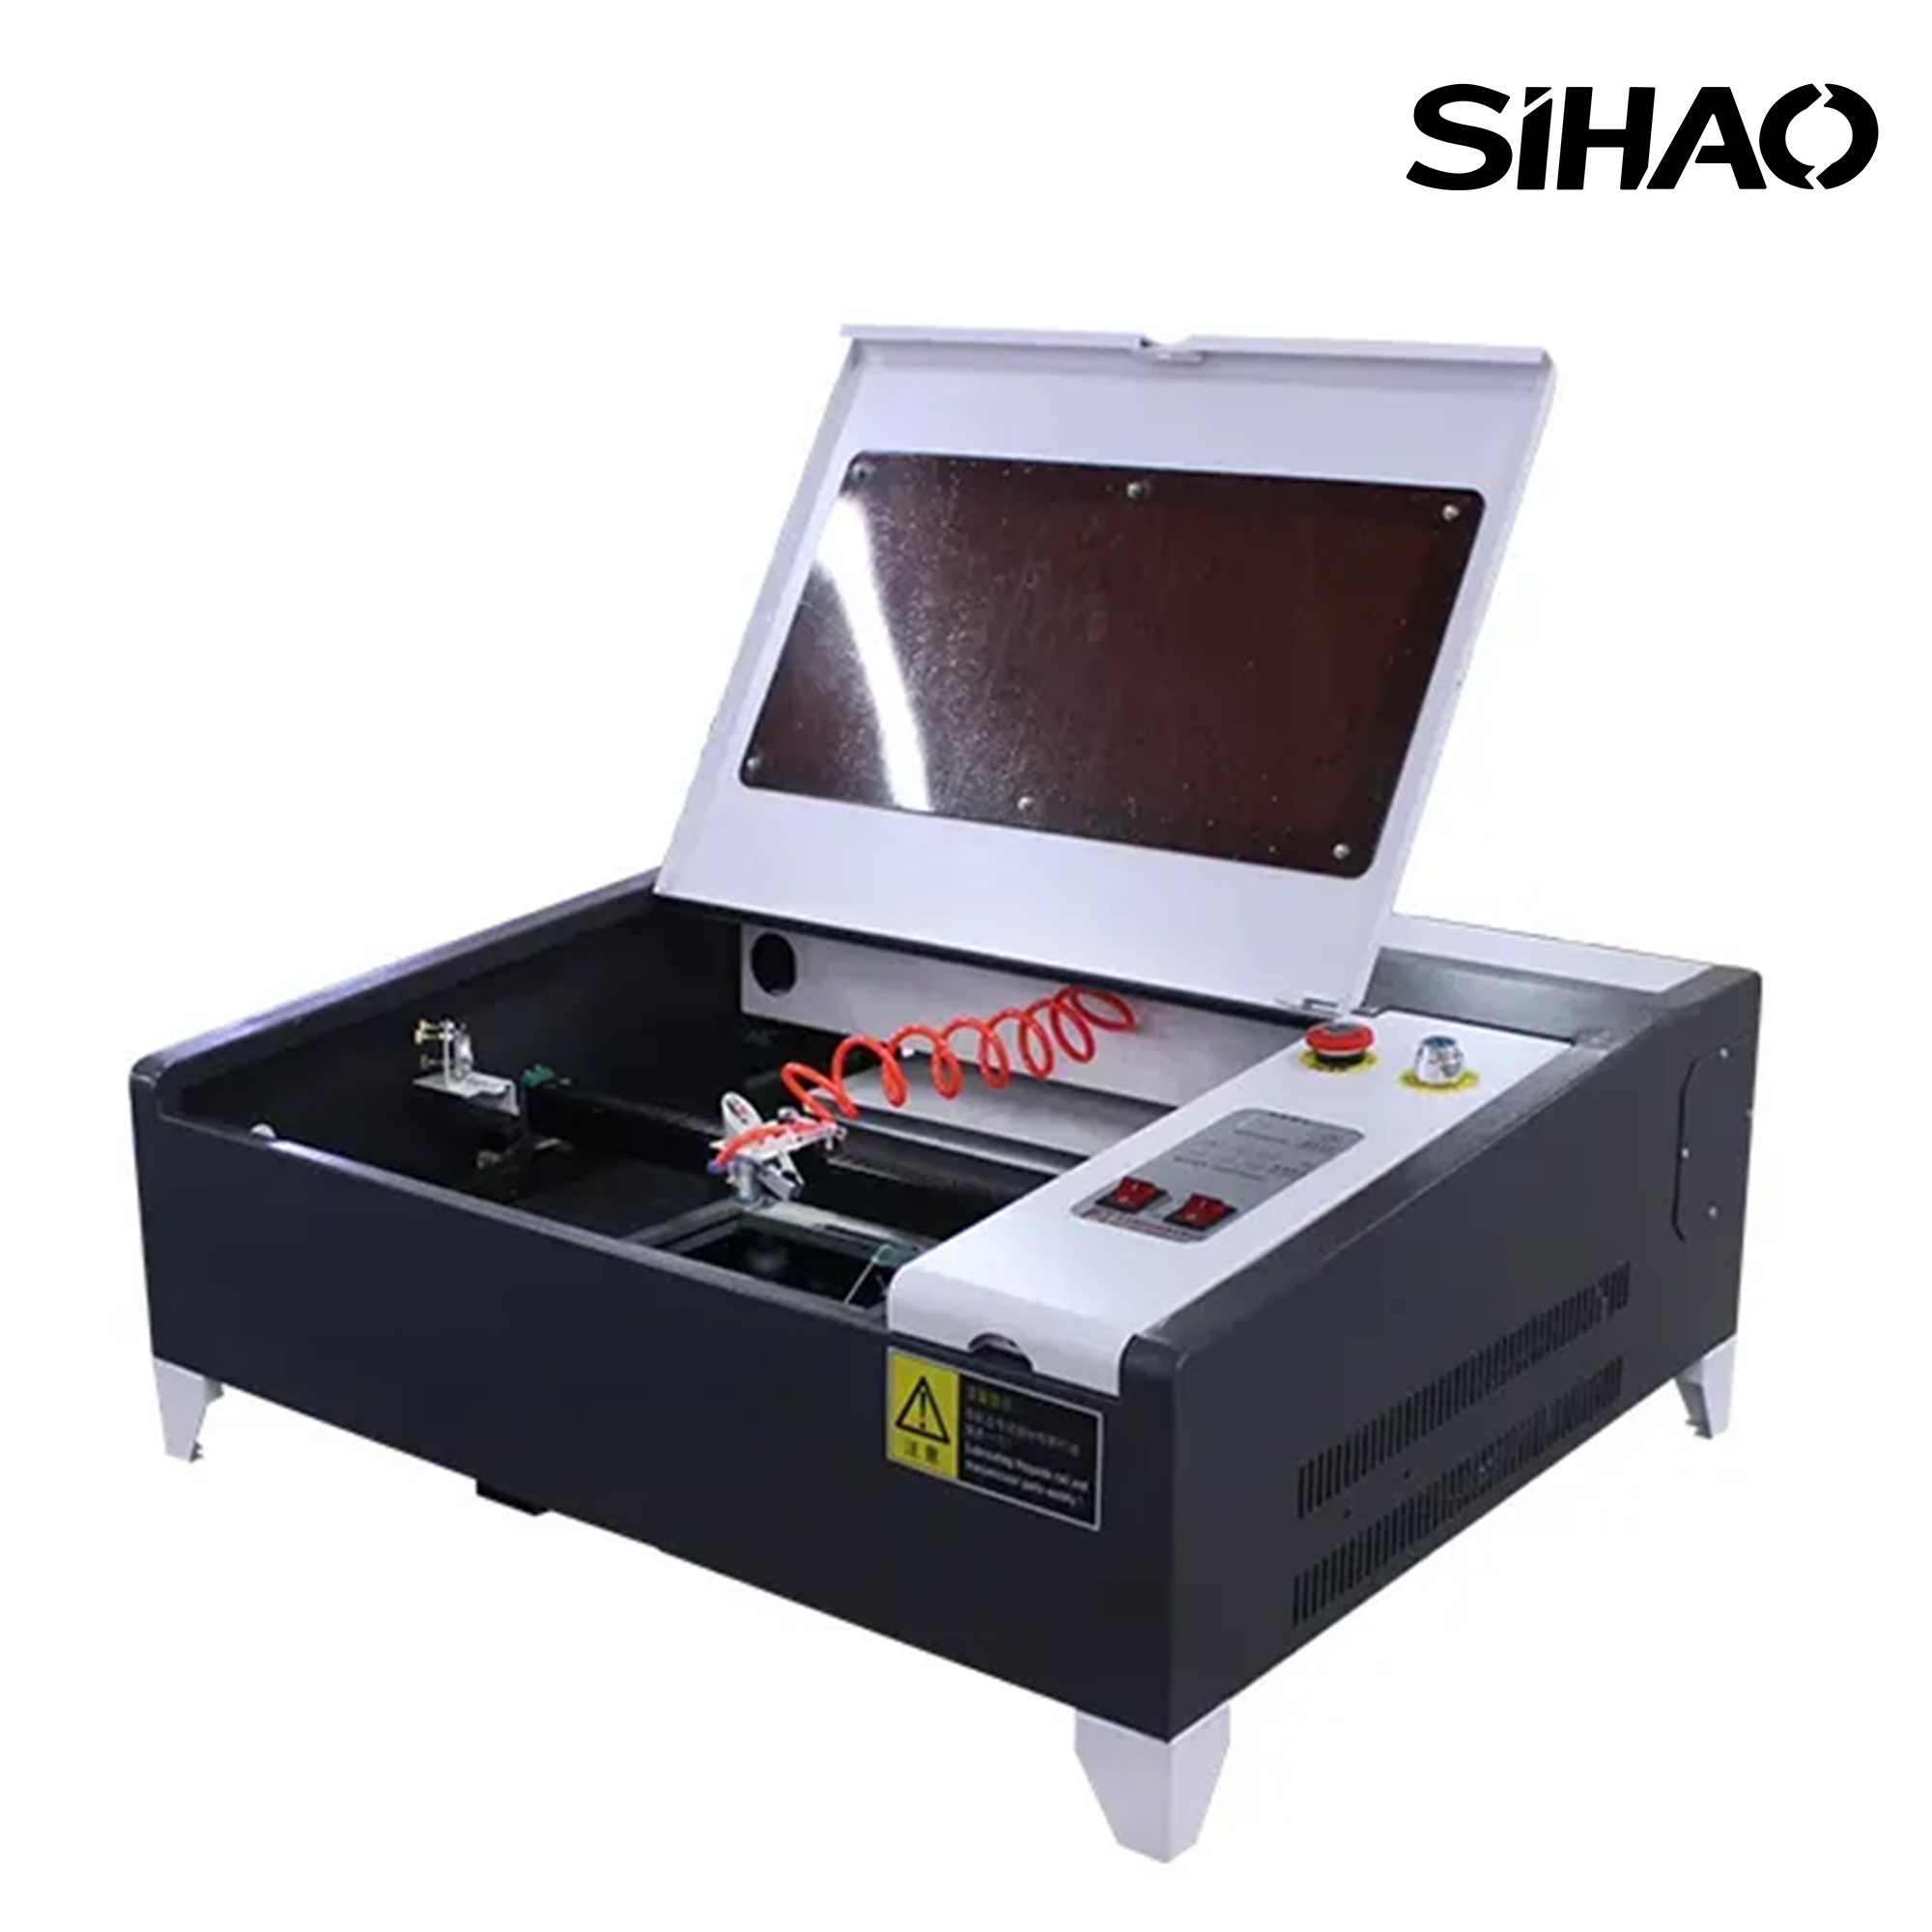 SIHAO 400X400MM Laser Engraving Machine